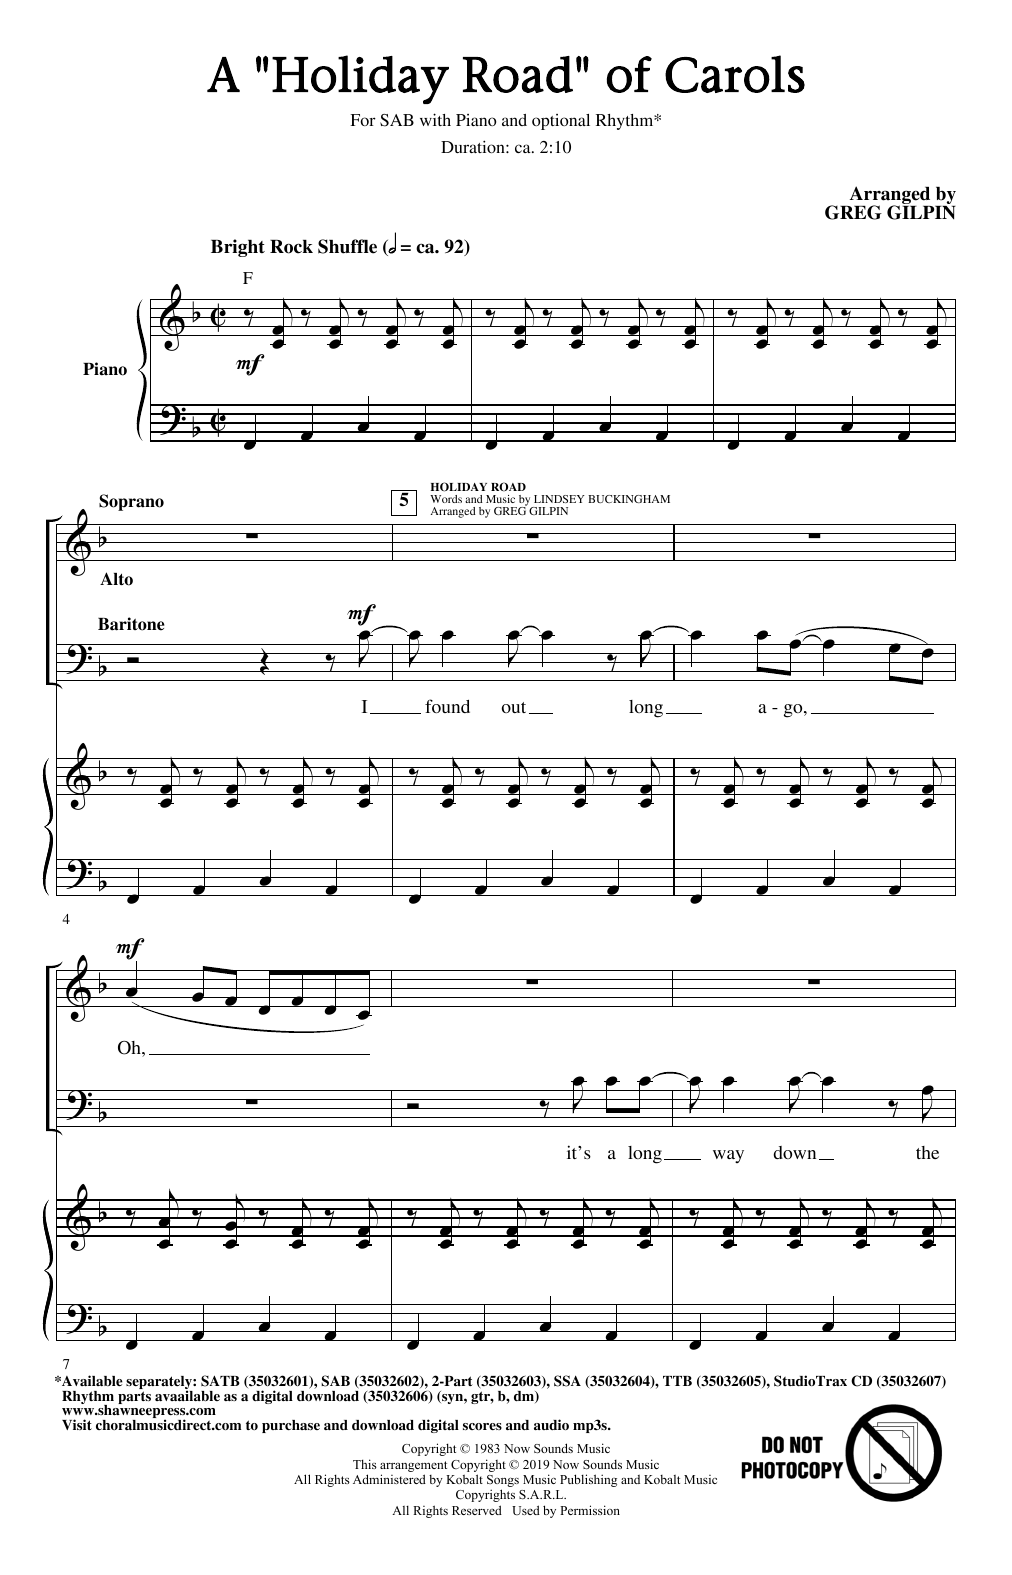 Greg Gilpin A Holiday Road Of Carols (arr. Greg Gilpin) Sheet Music Notes & Chords for SATB Choir - Download or Print PDF